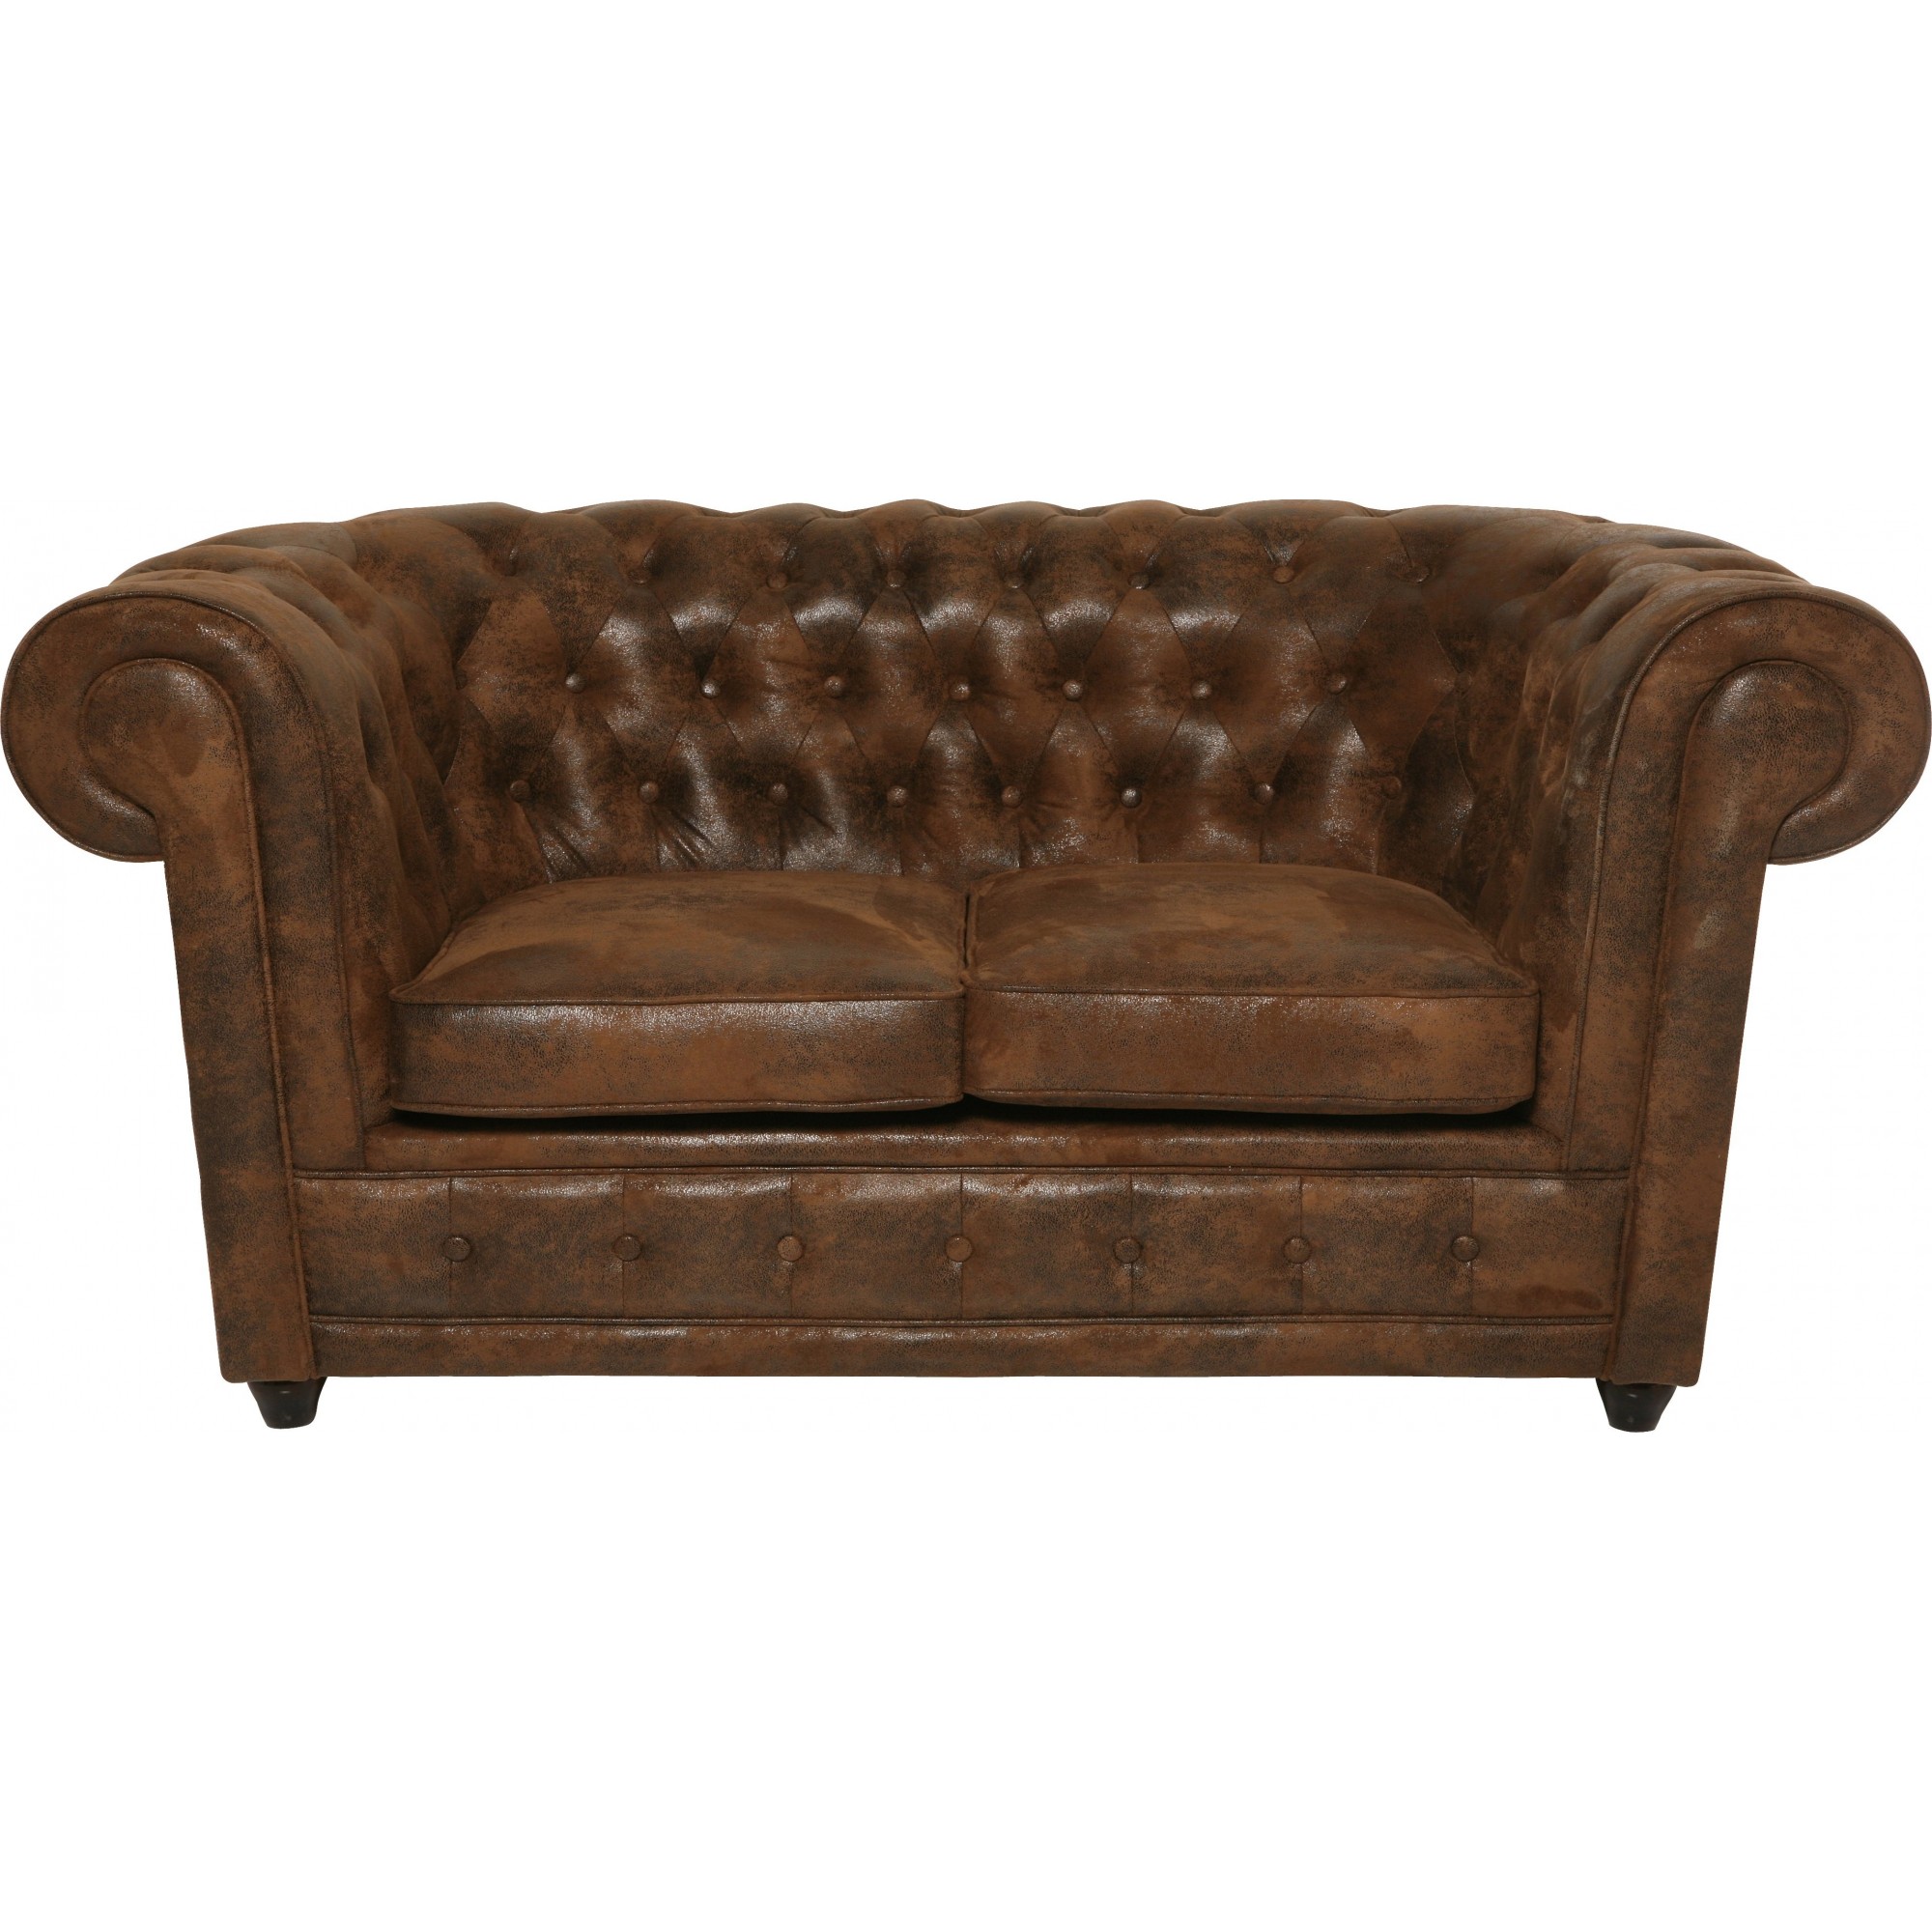 Sofa Oxford 2-Seater Vintage Econo Kare Design